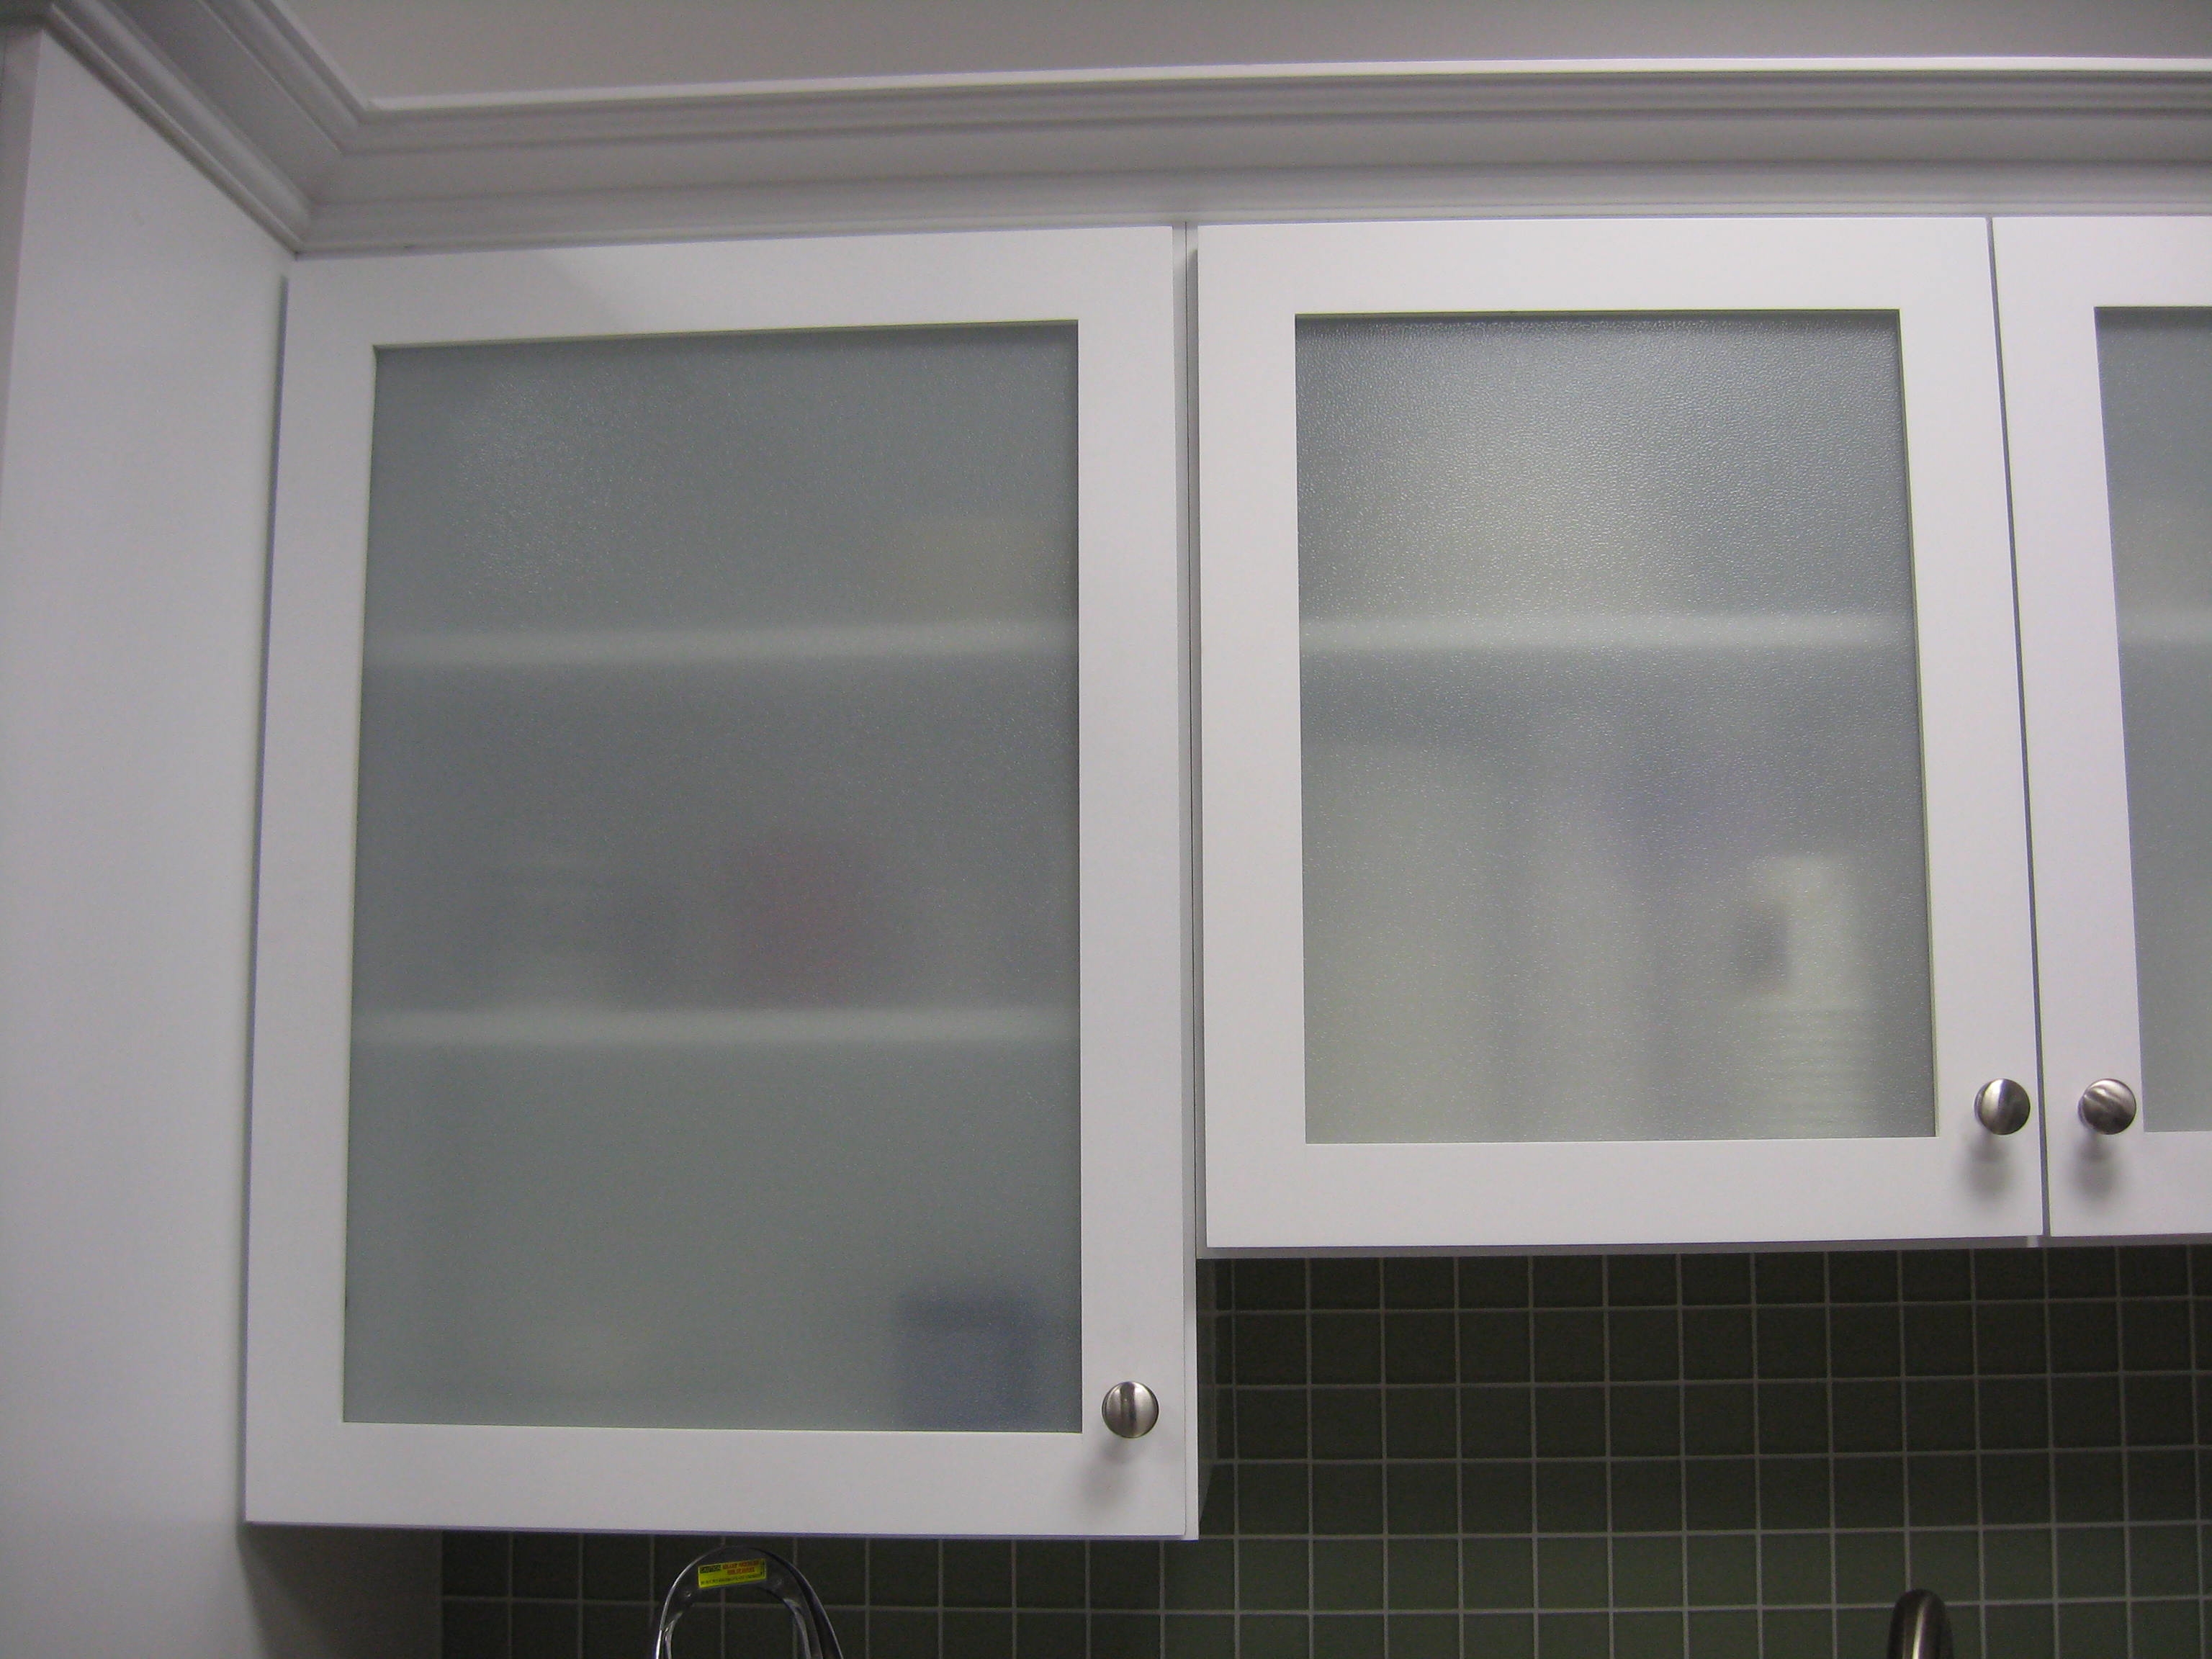 Kitchen Cabinets With Sliding Glass Doorsfloor storage cabinet with glass doors creative cabinets decoration